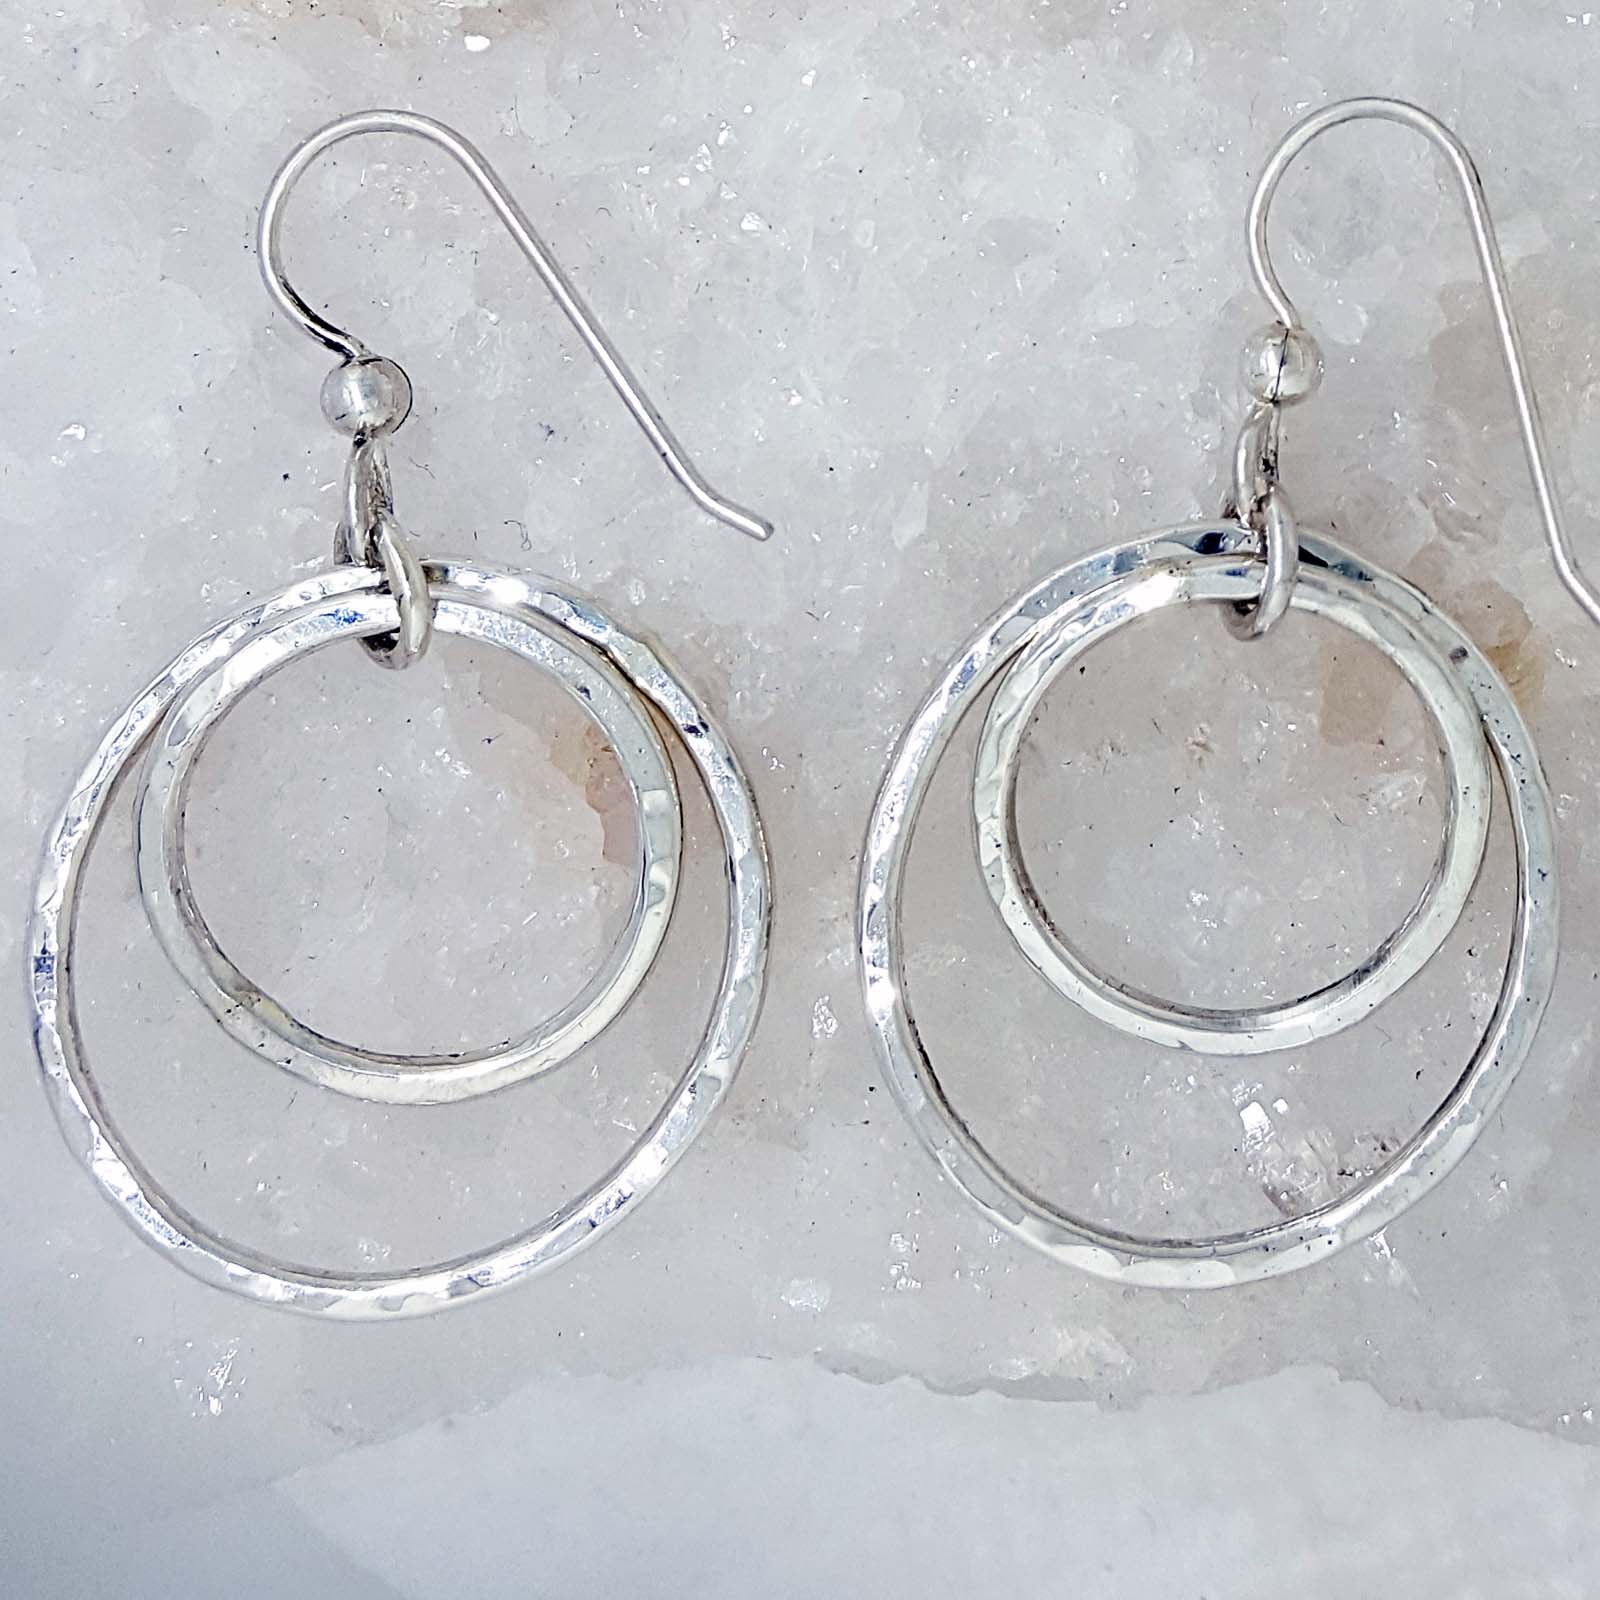 Silver hoop earrings in medium size